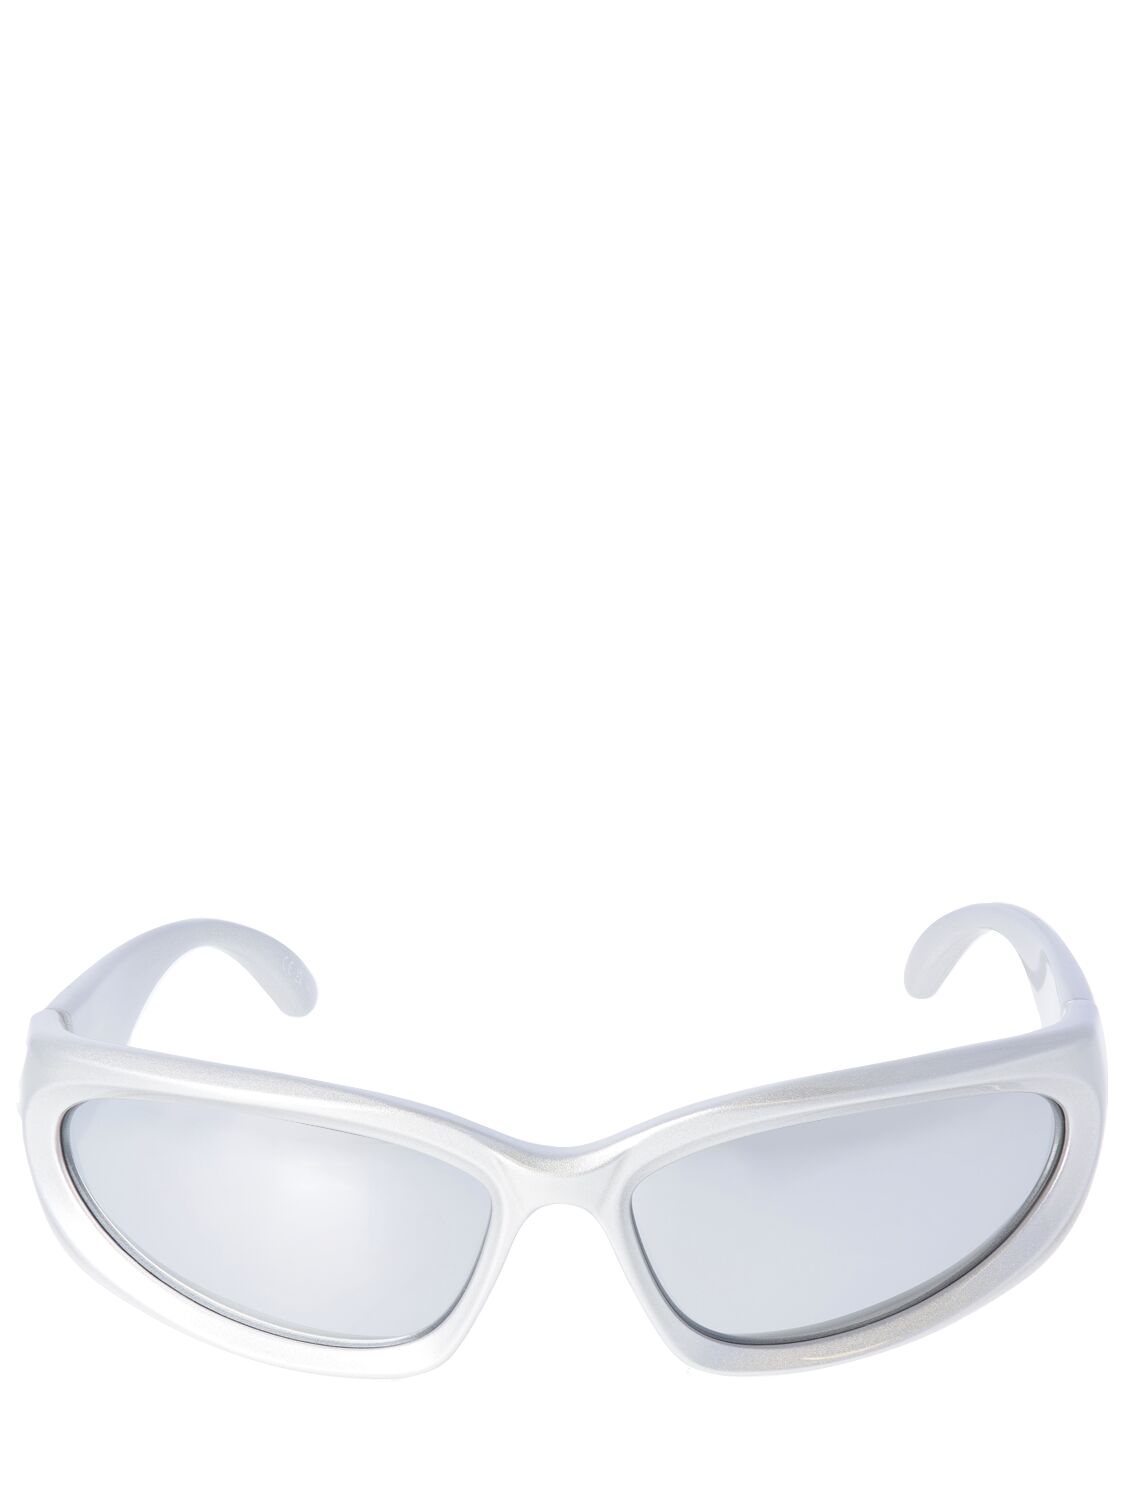 Image of Swift Oval 0157s Sunglasses